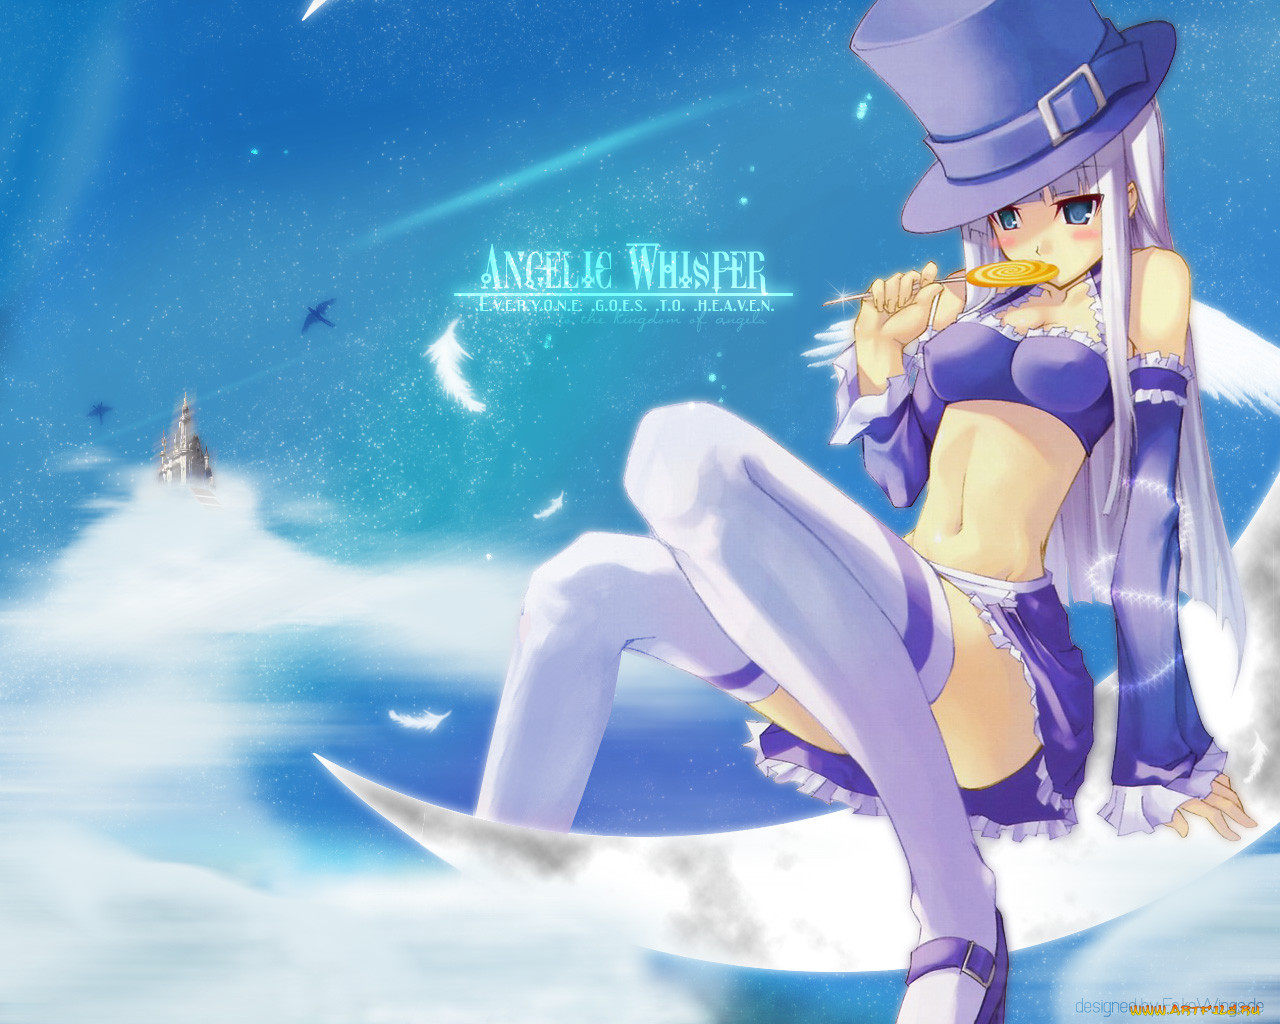 Angelic_whisper